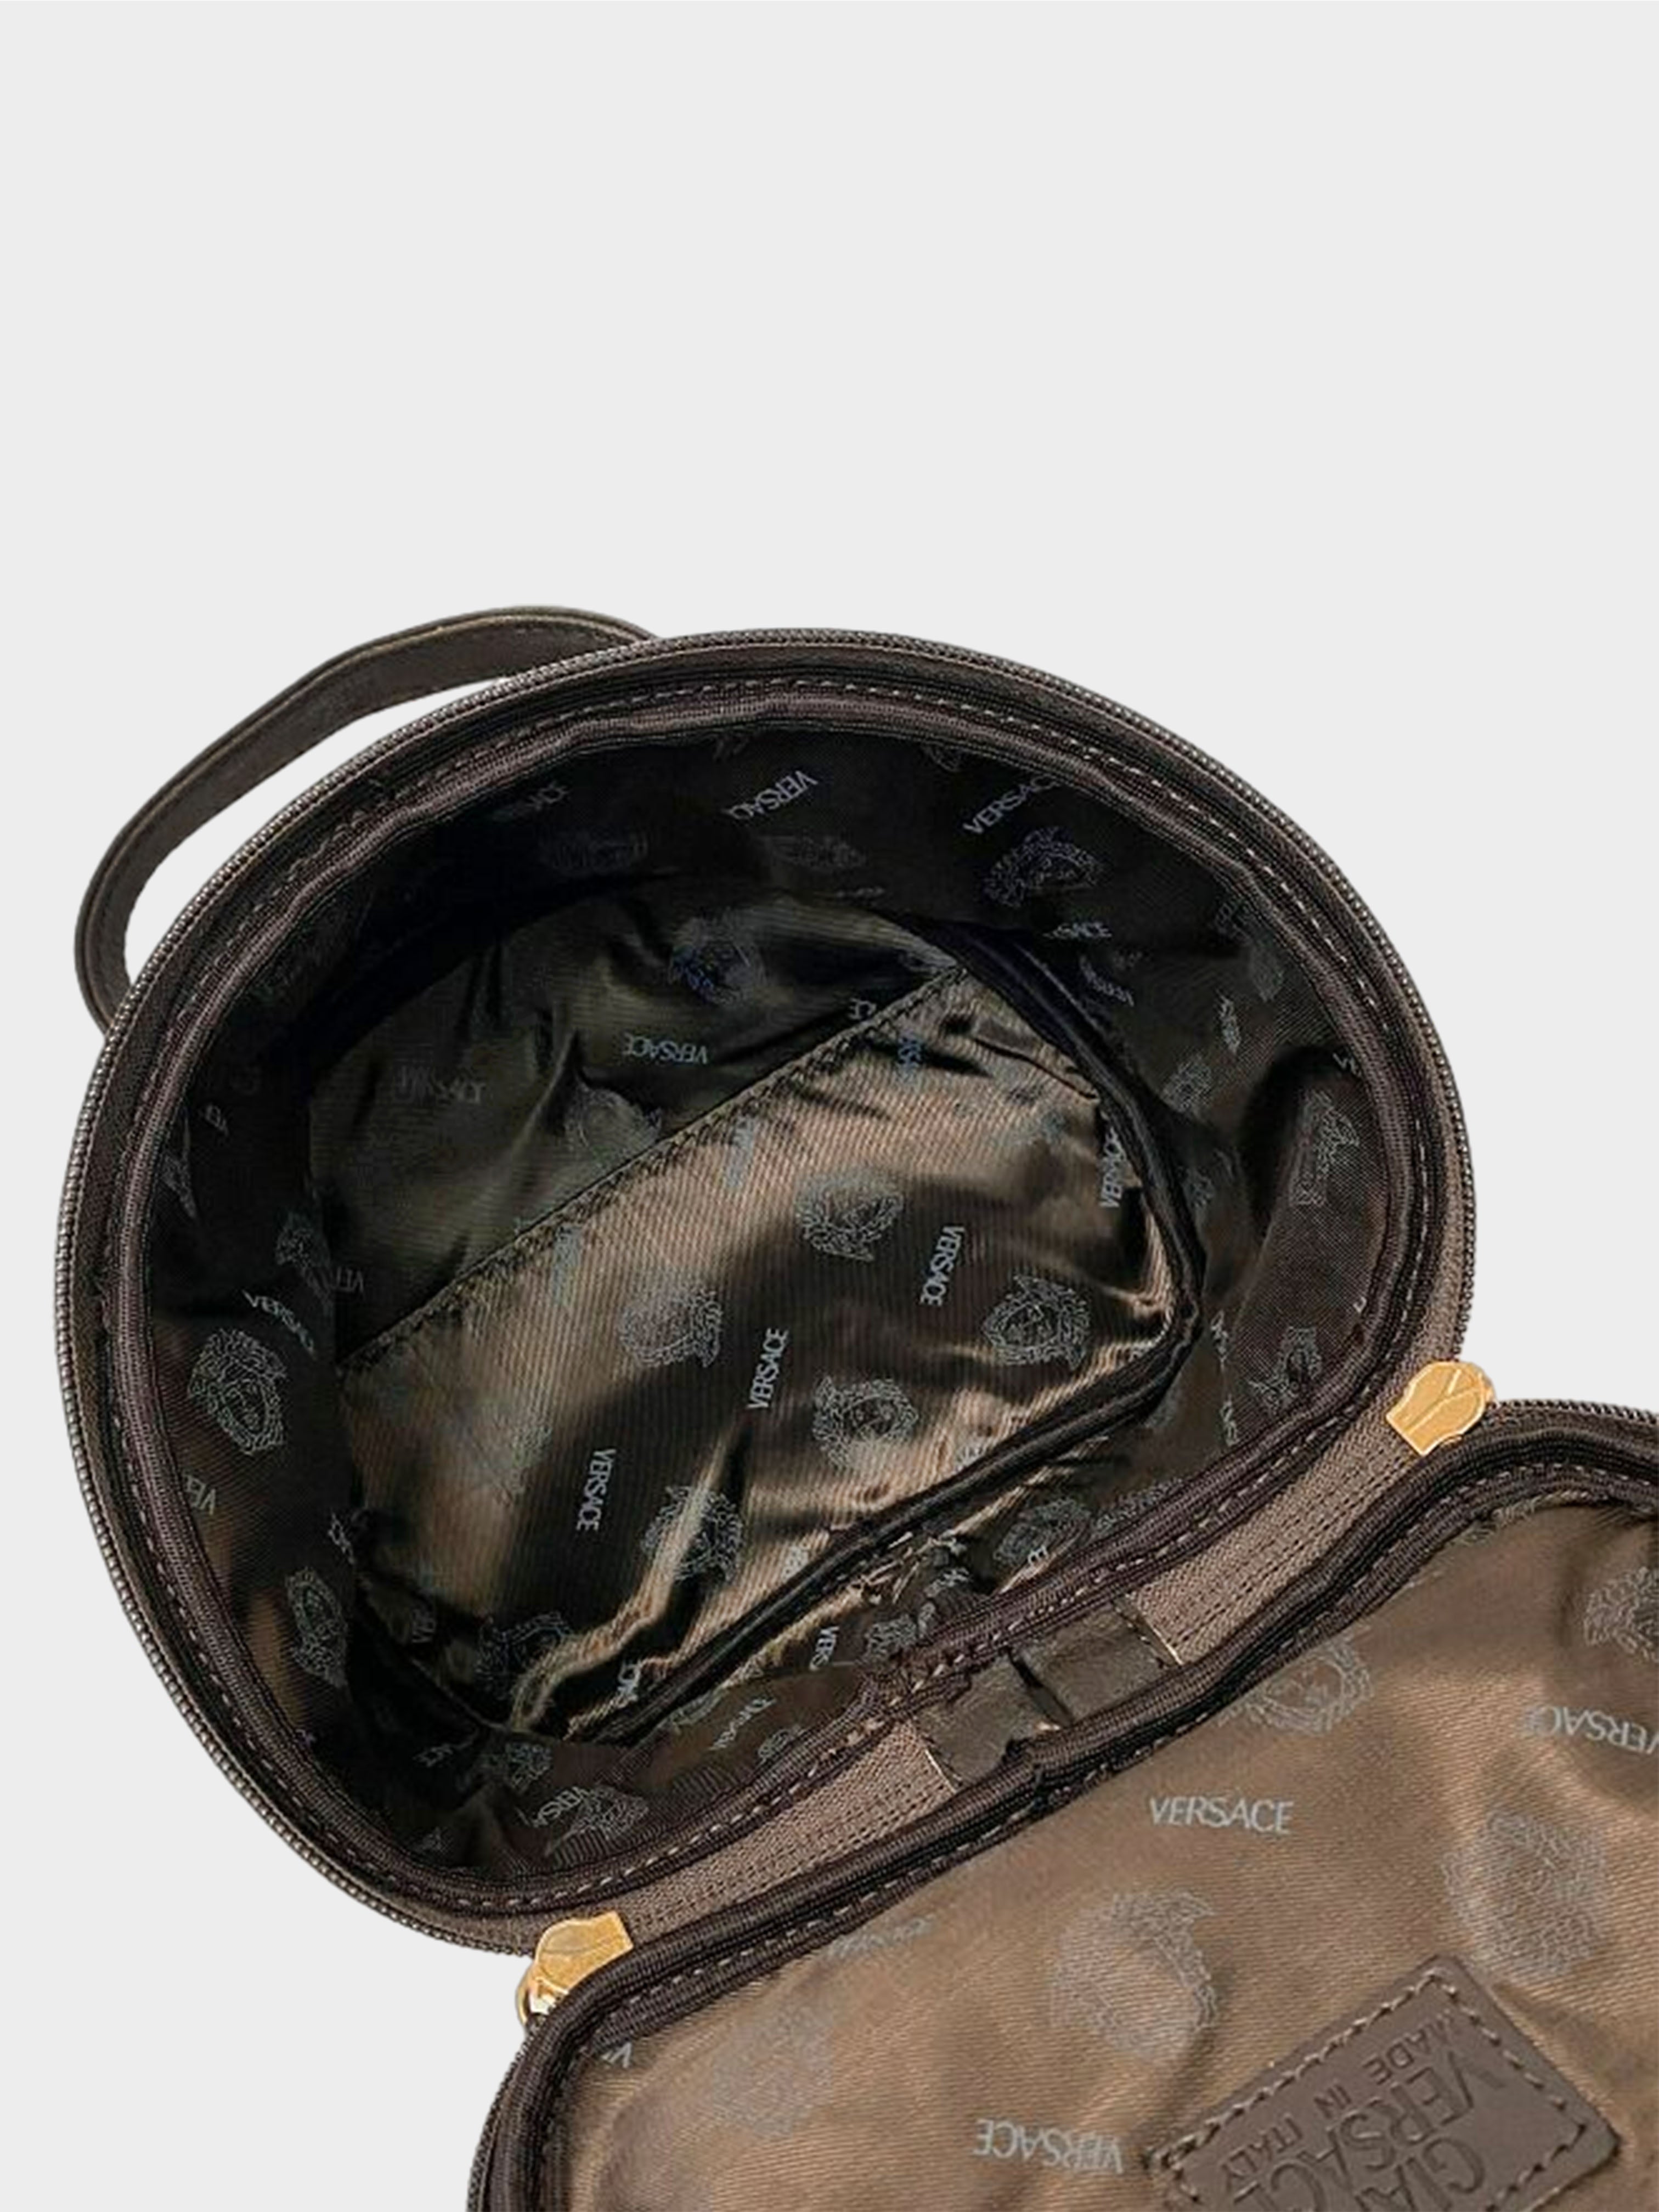 Gianni Versace 2000s Brown Medusa Head Mini Handbag